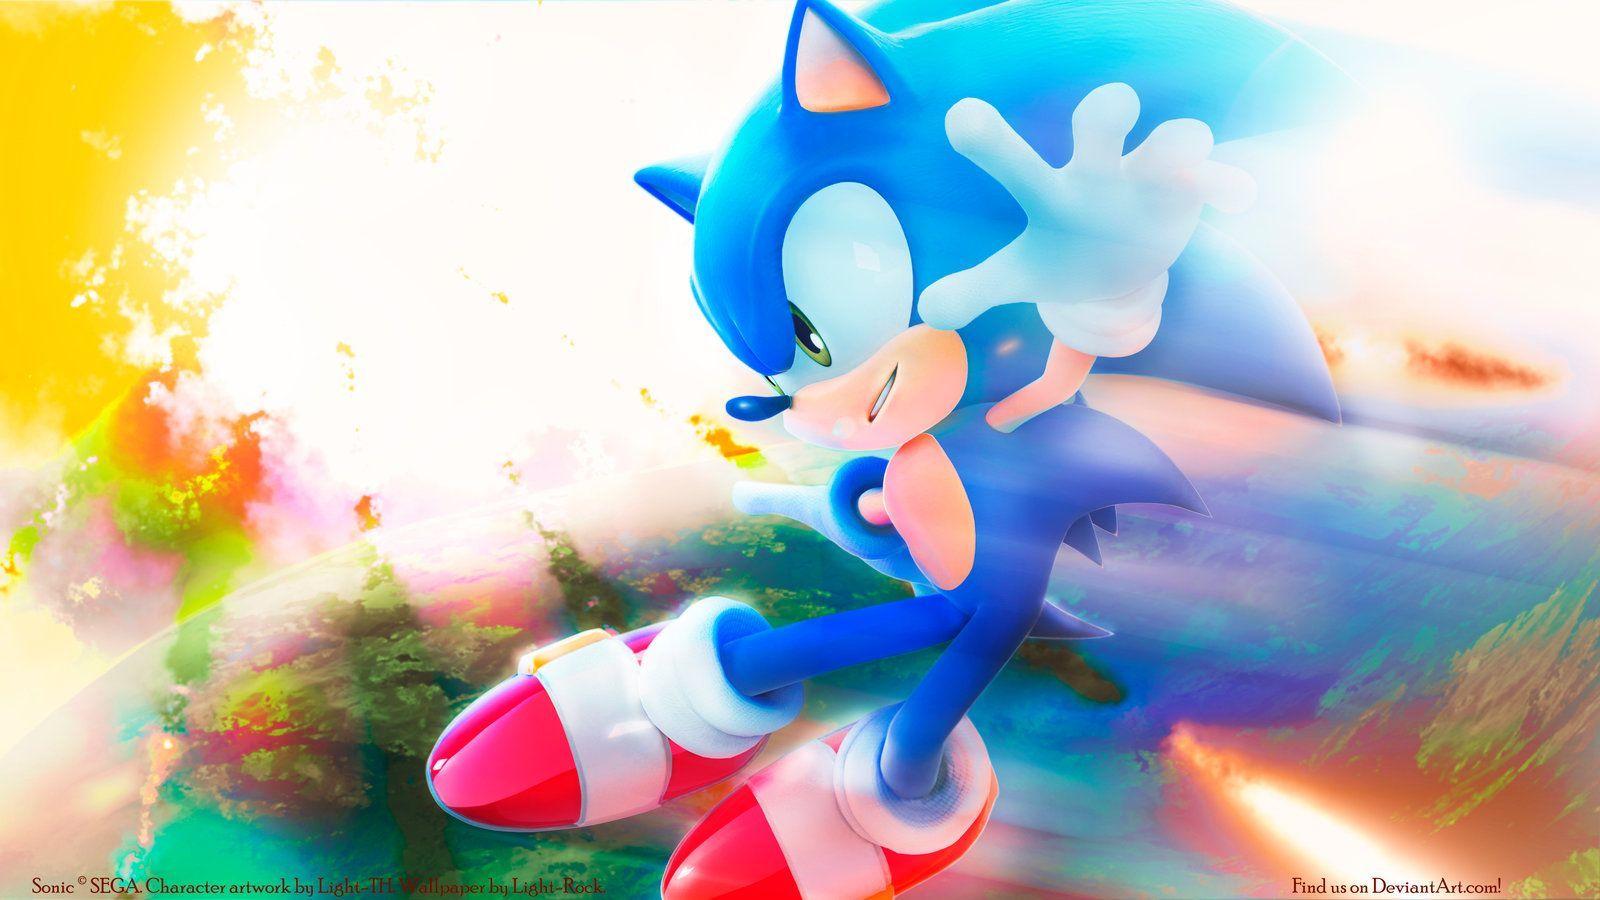 Sonic The Hedgehog Wallpaper By Light Rock